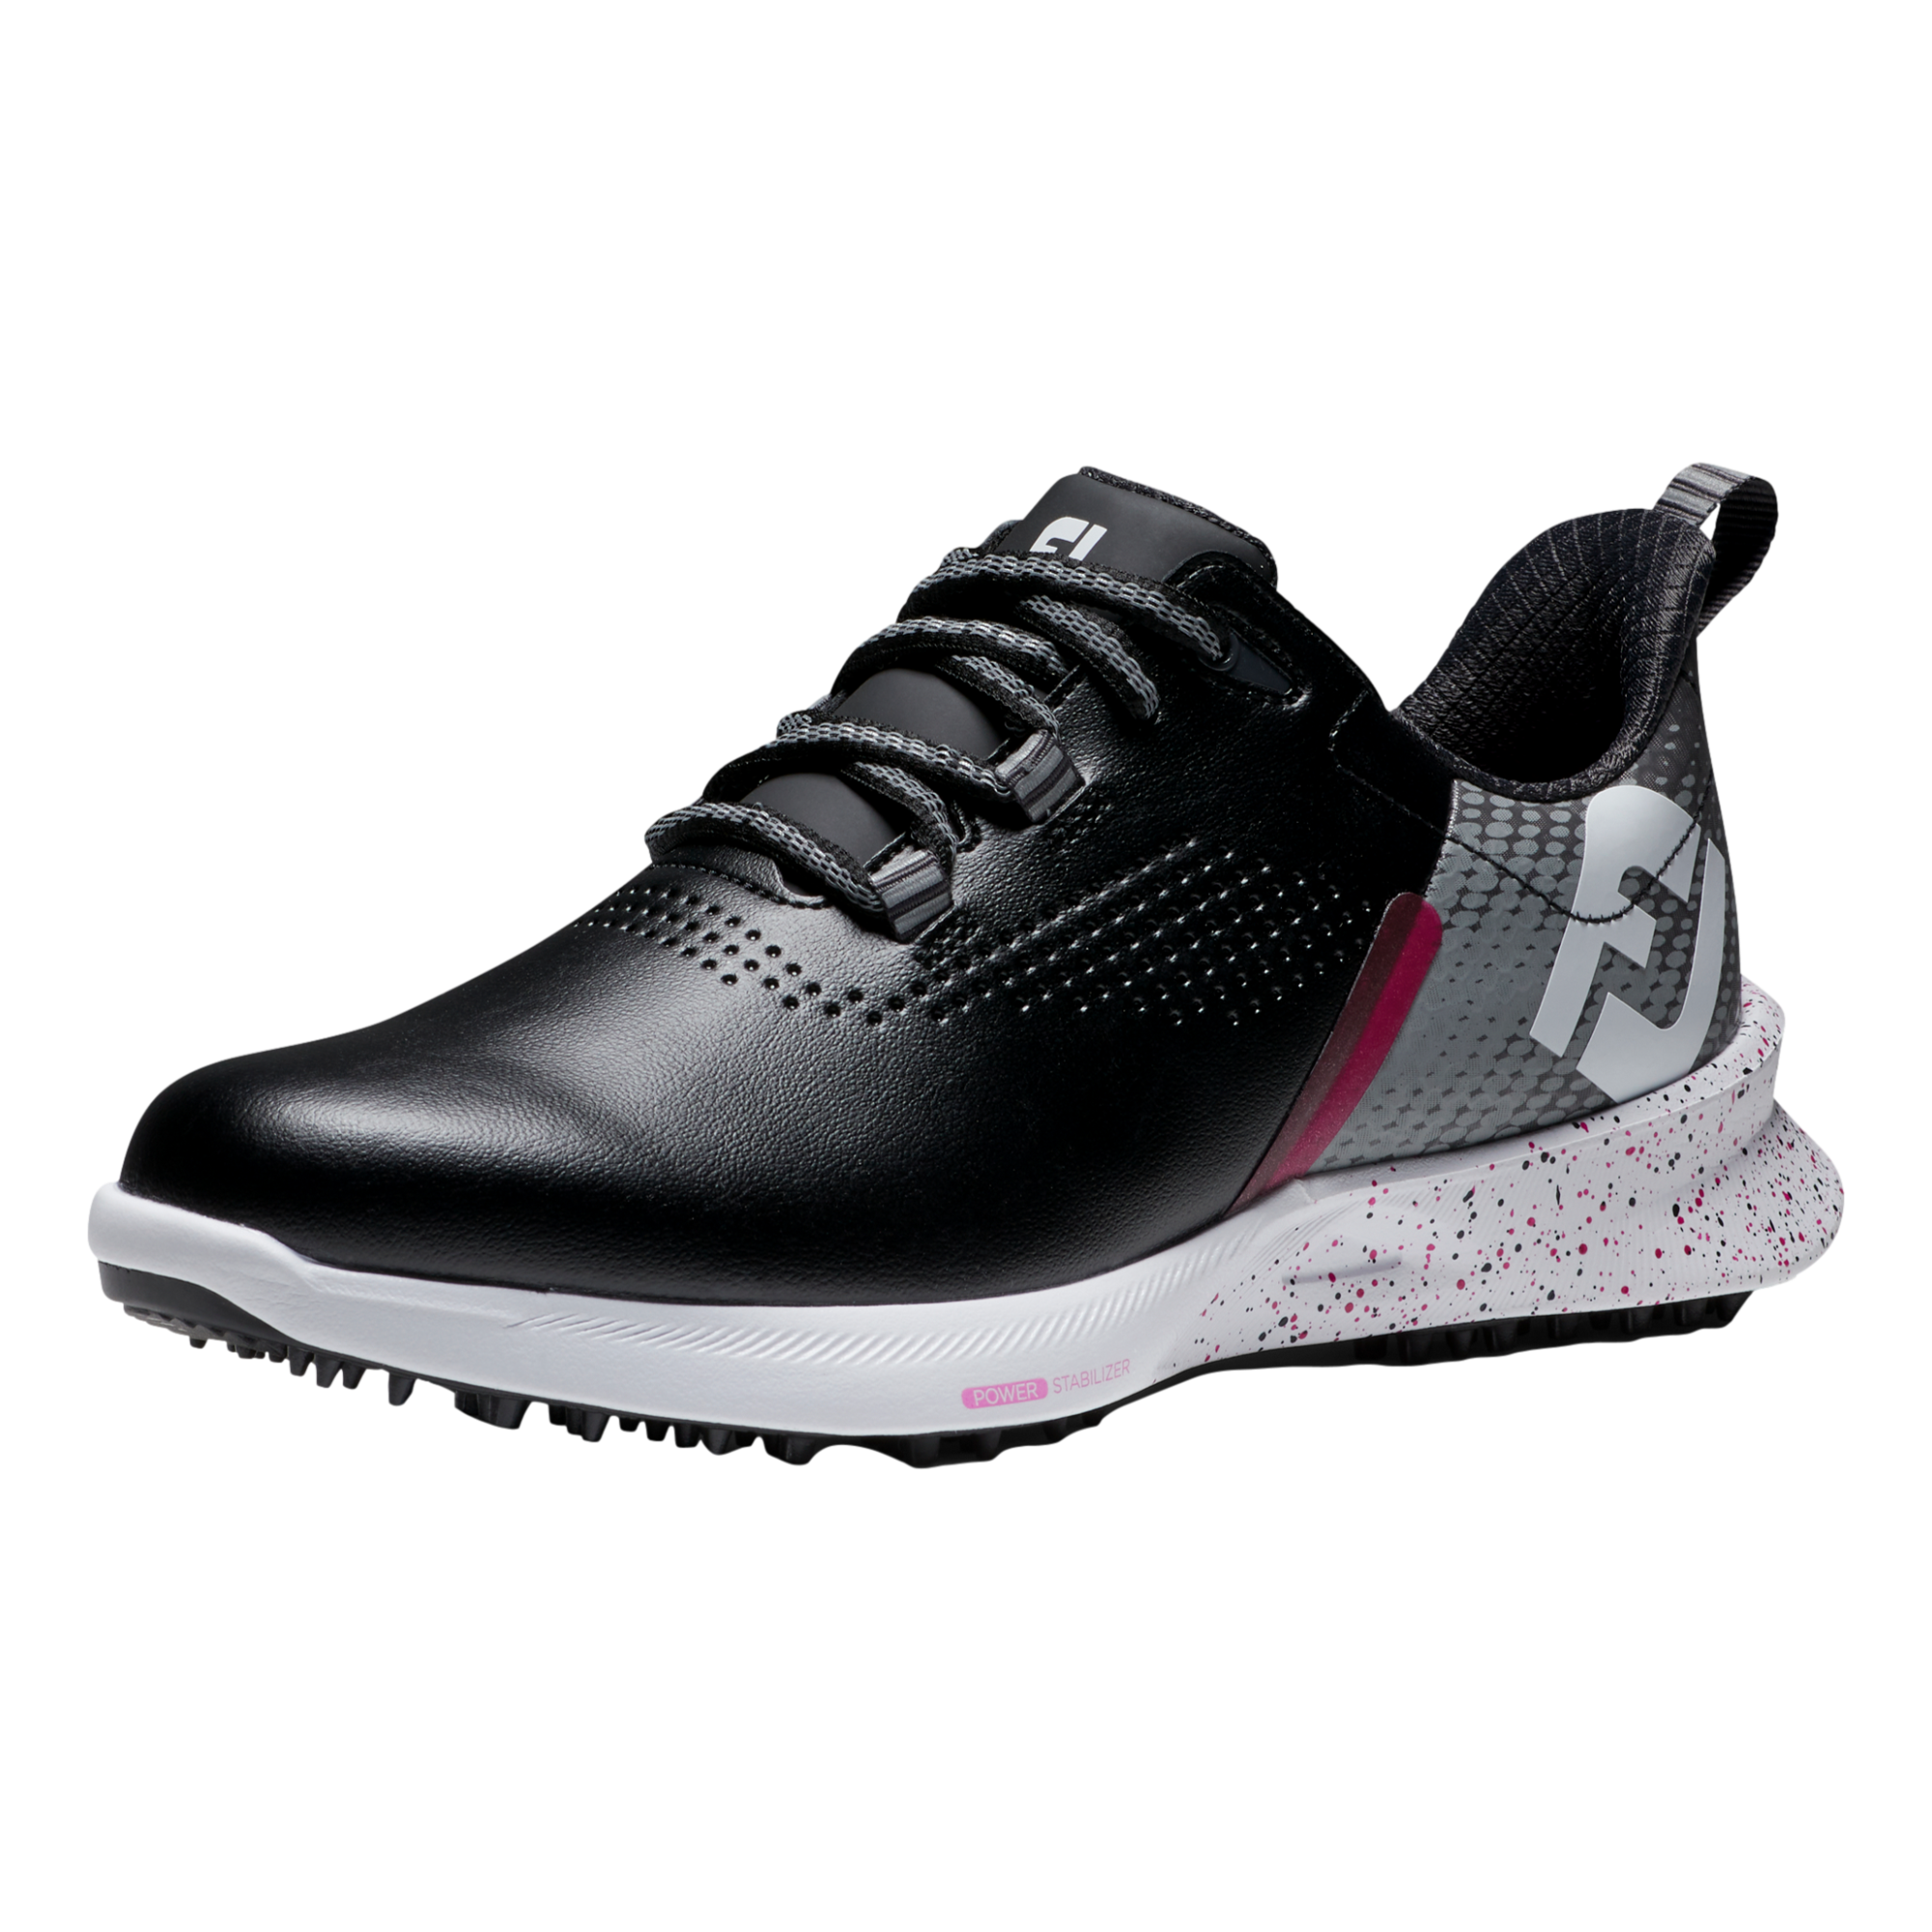 Fuel Women's Golf Shoe